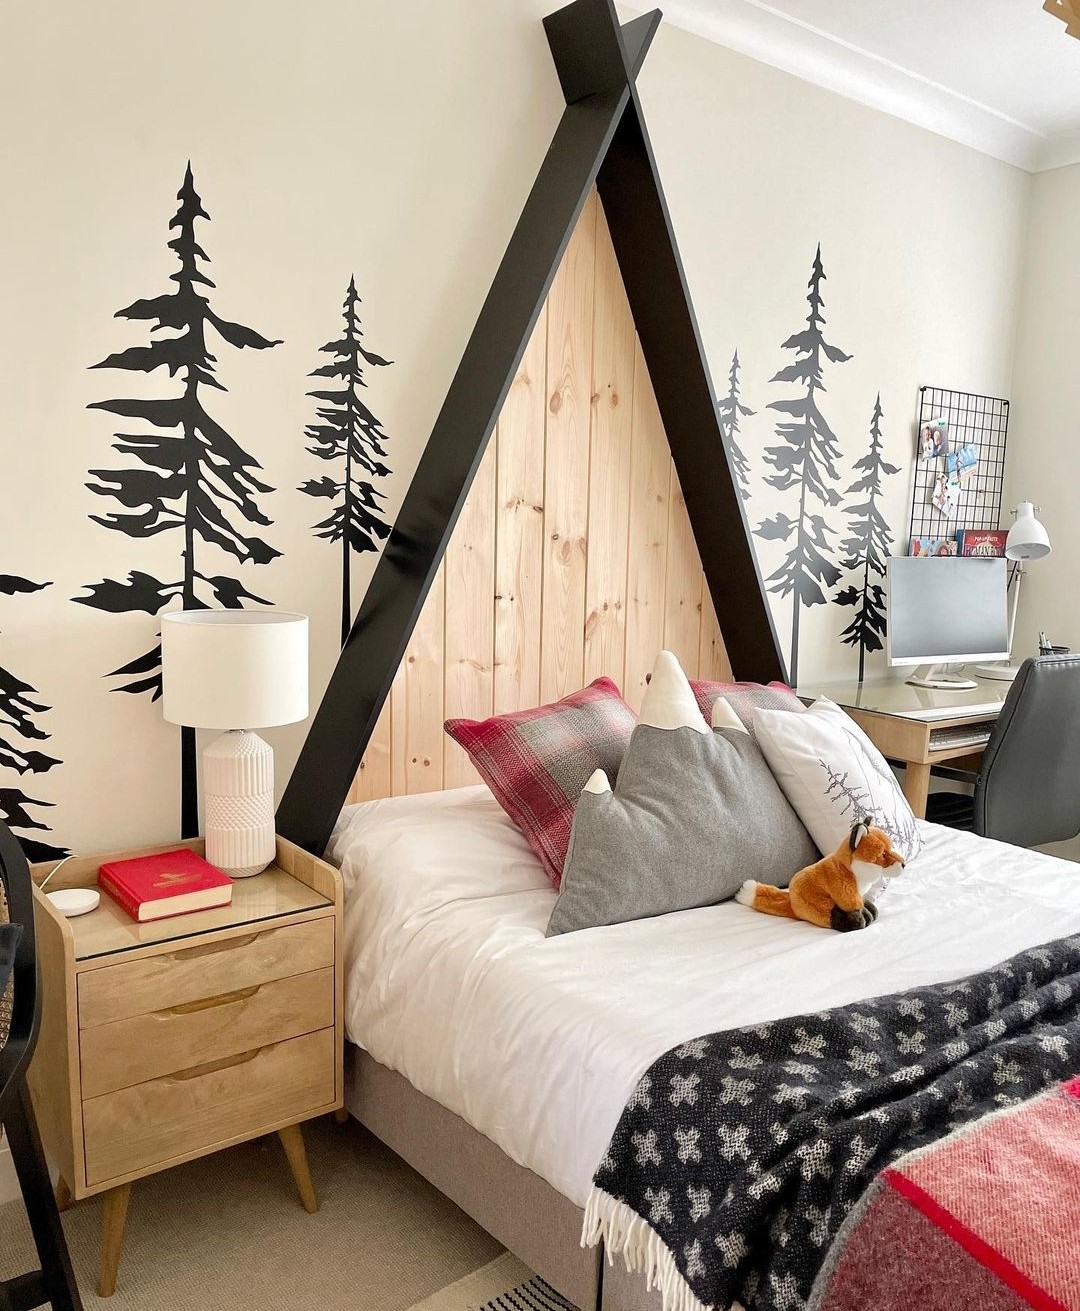 Camping themed boys bedroom